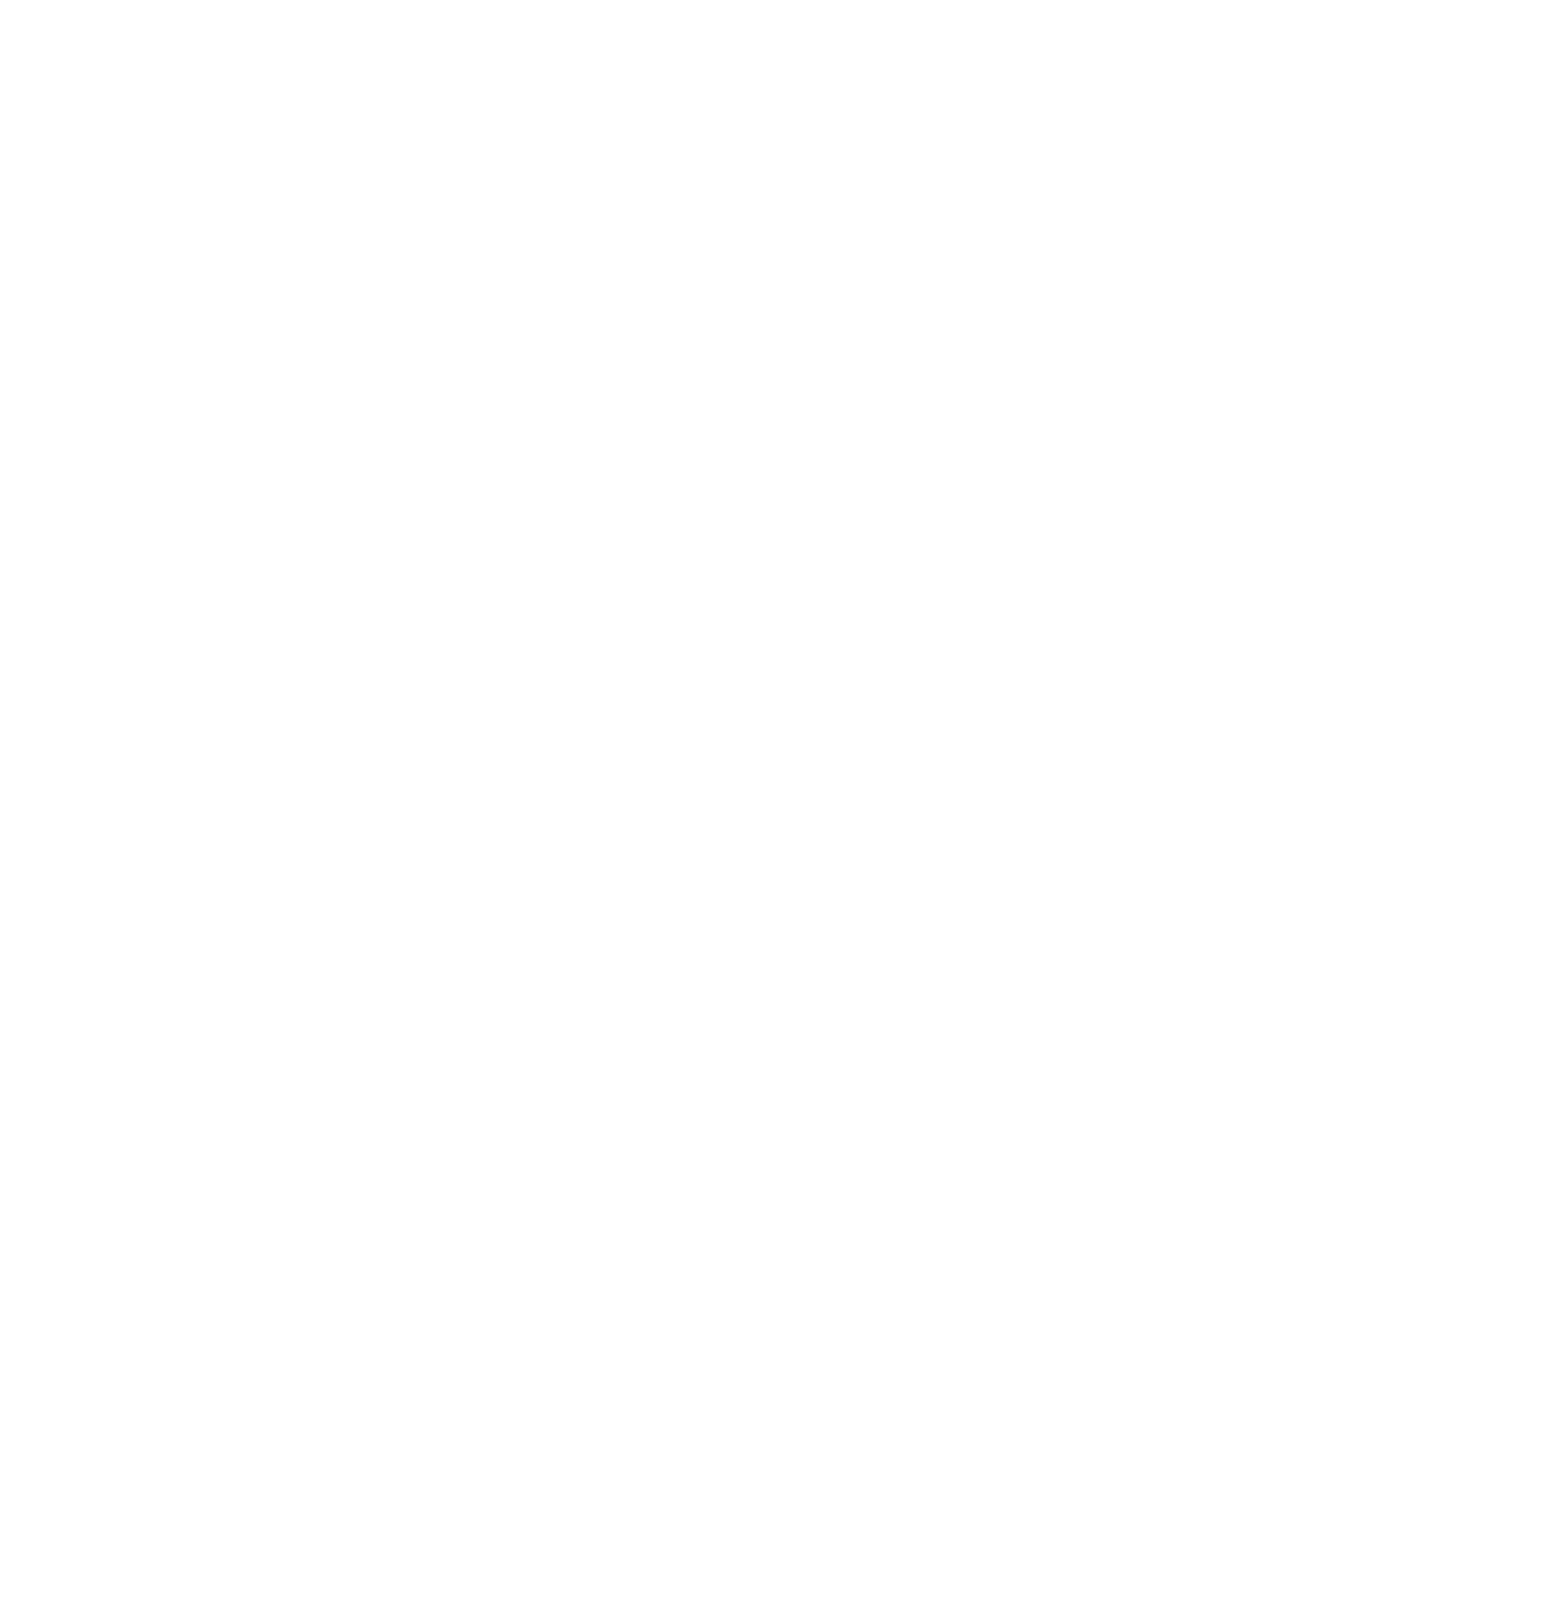 Adecco Group logo pour fonds sombres (PNG transparent)